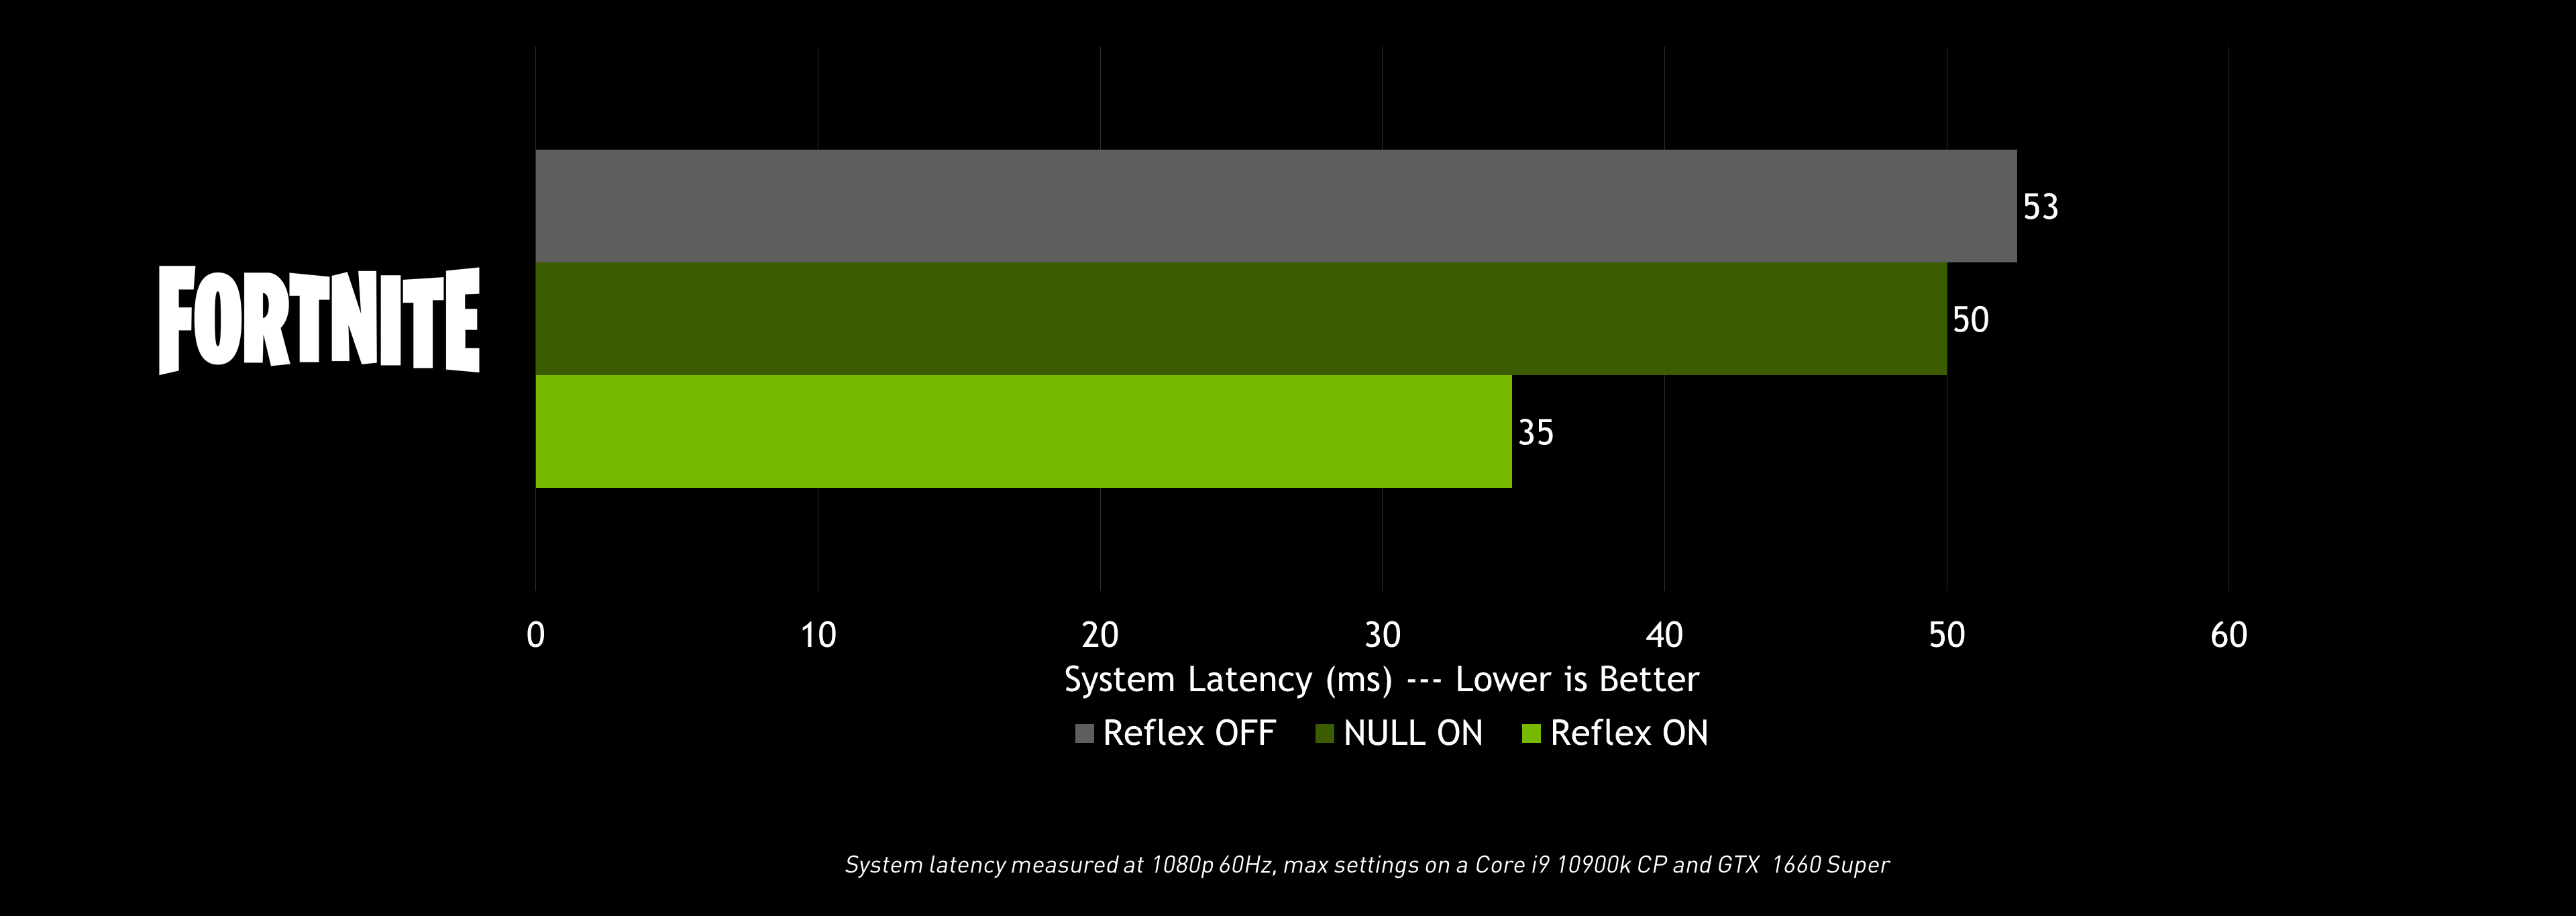 Low latency gaming. NVIDIA Reflex Low latency Fortnite. NVIDIA Reflex Low latency что это. NVIDIA Reflex для слабых ПК?. Как включить NVIDIA Reflex.